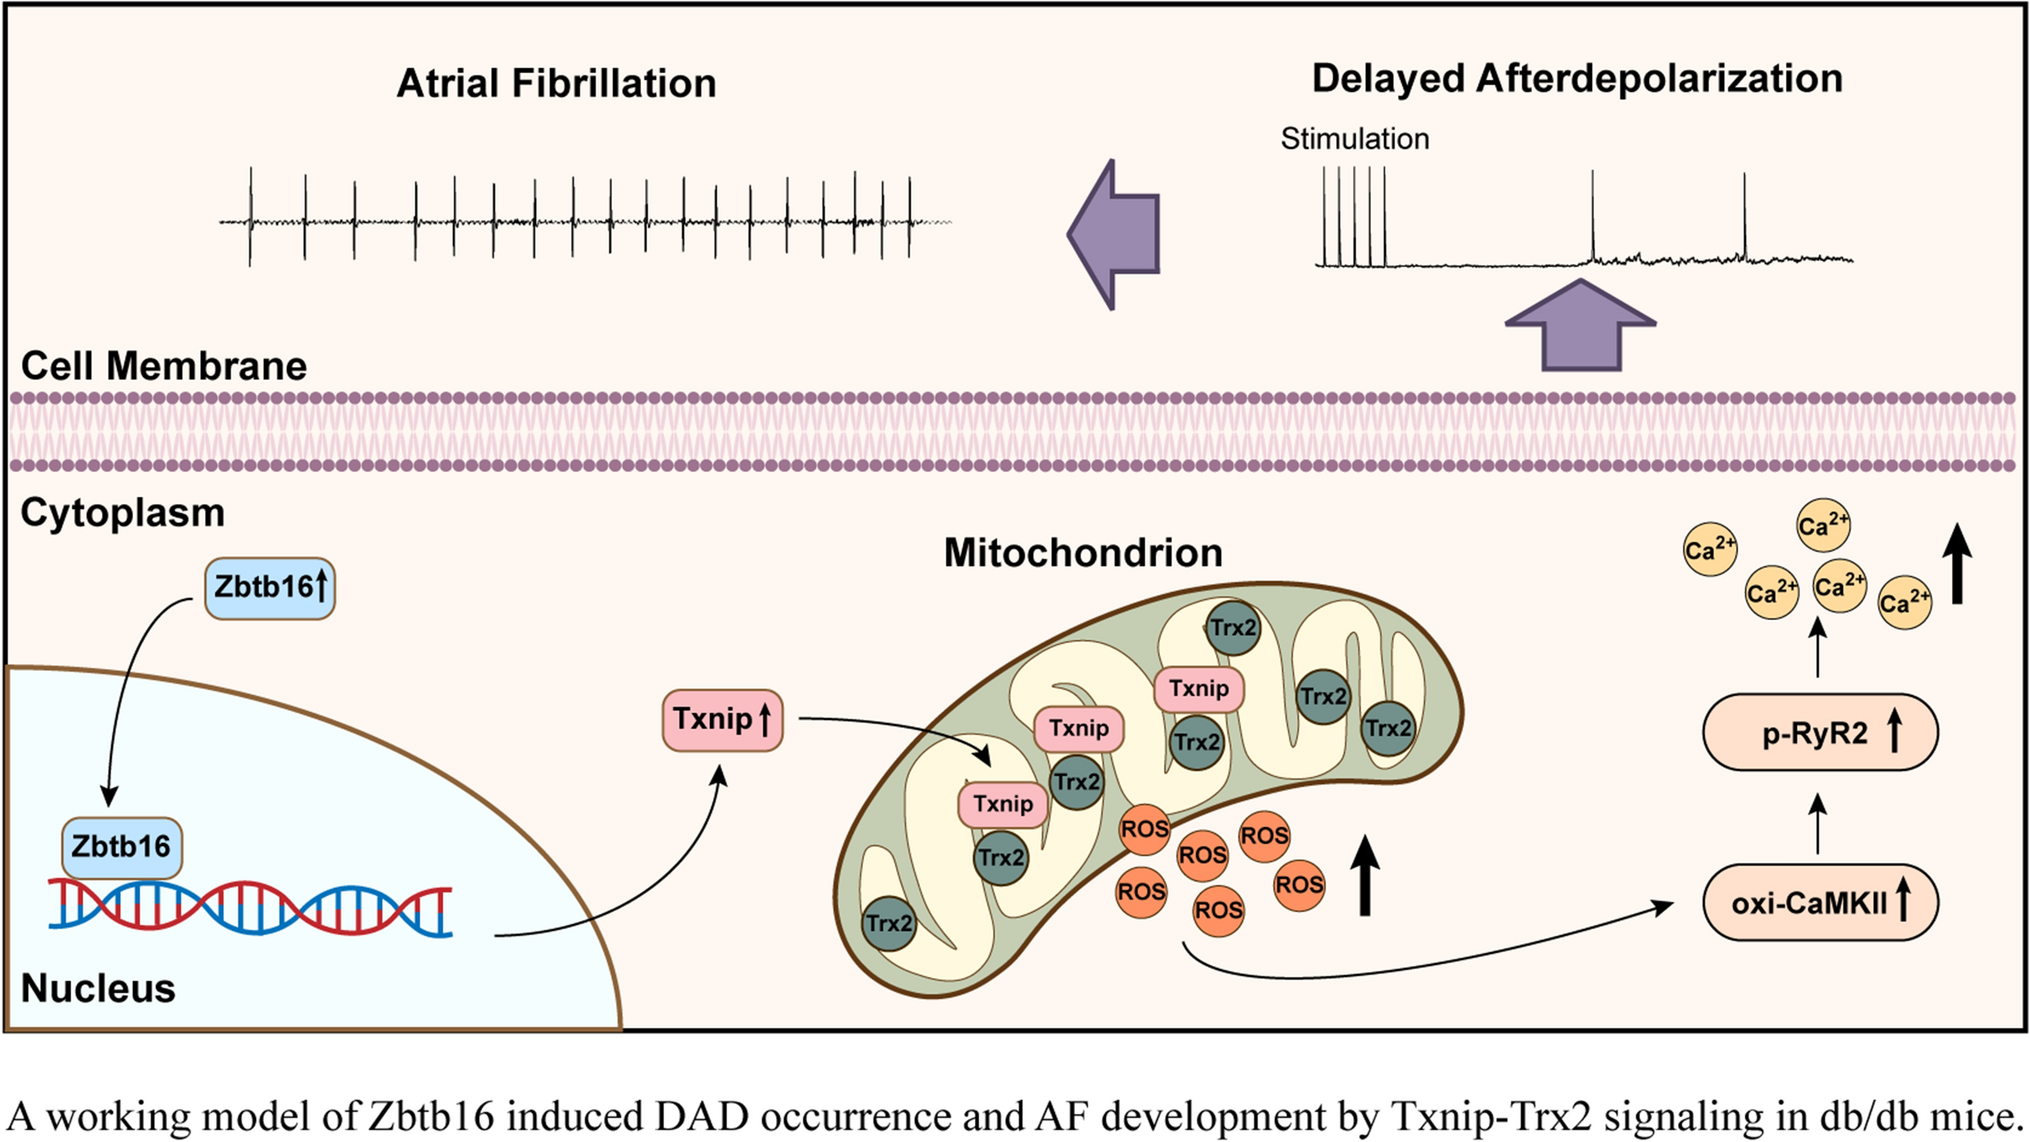 Zbtb16 increases susceptibility of atrial fibrillation in type 2 diabetic mice via Txnip-Trx2 signaling